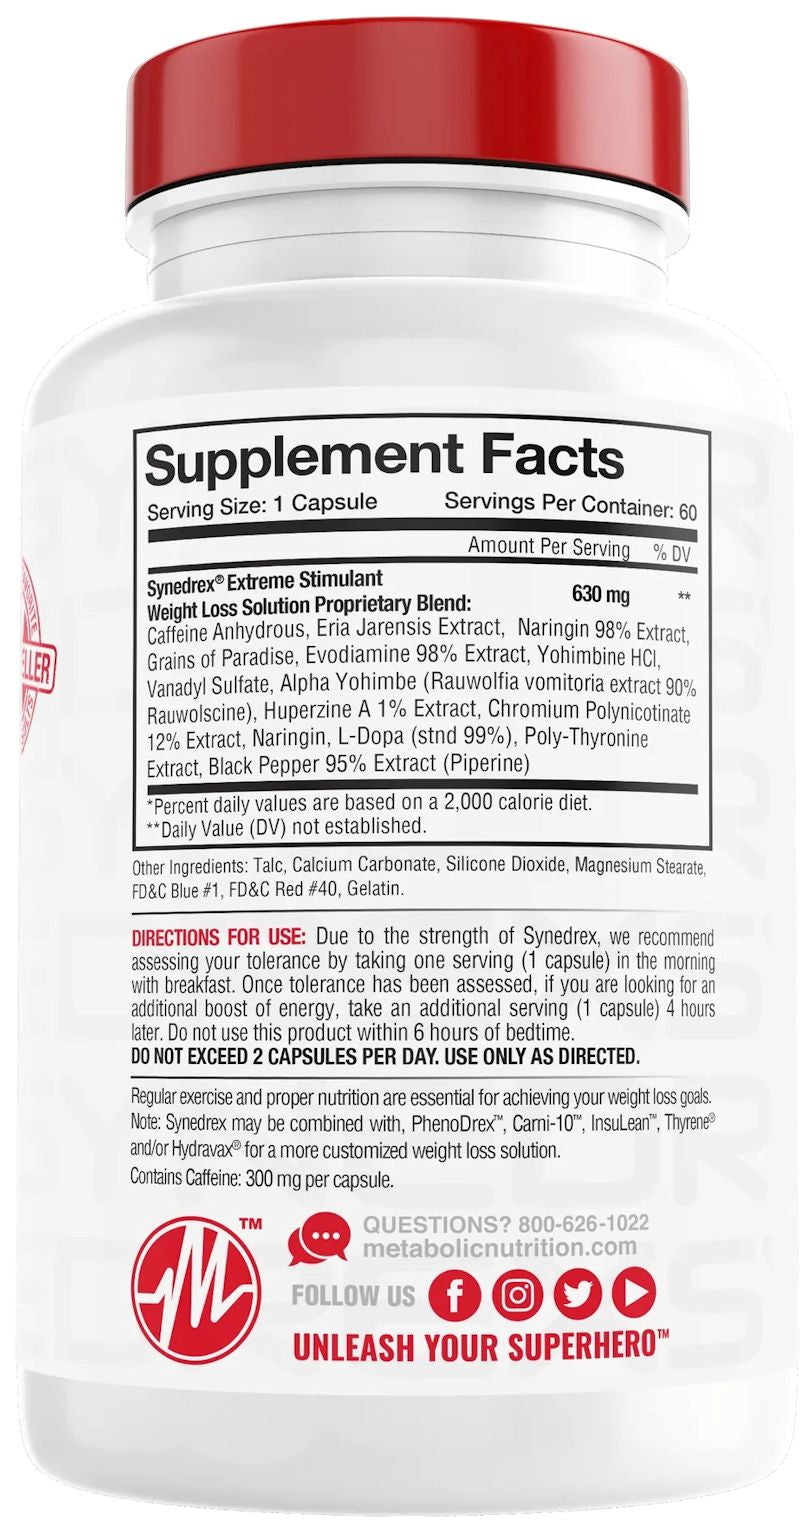 Metabolic Nutrition Synedrex Fat Burner 60 caps Free Leanx4|Lowcostvitamin.com